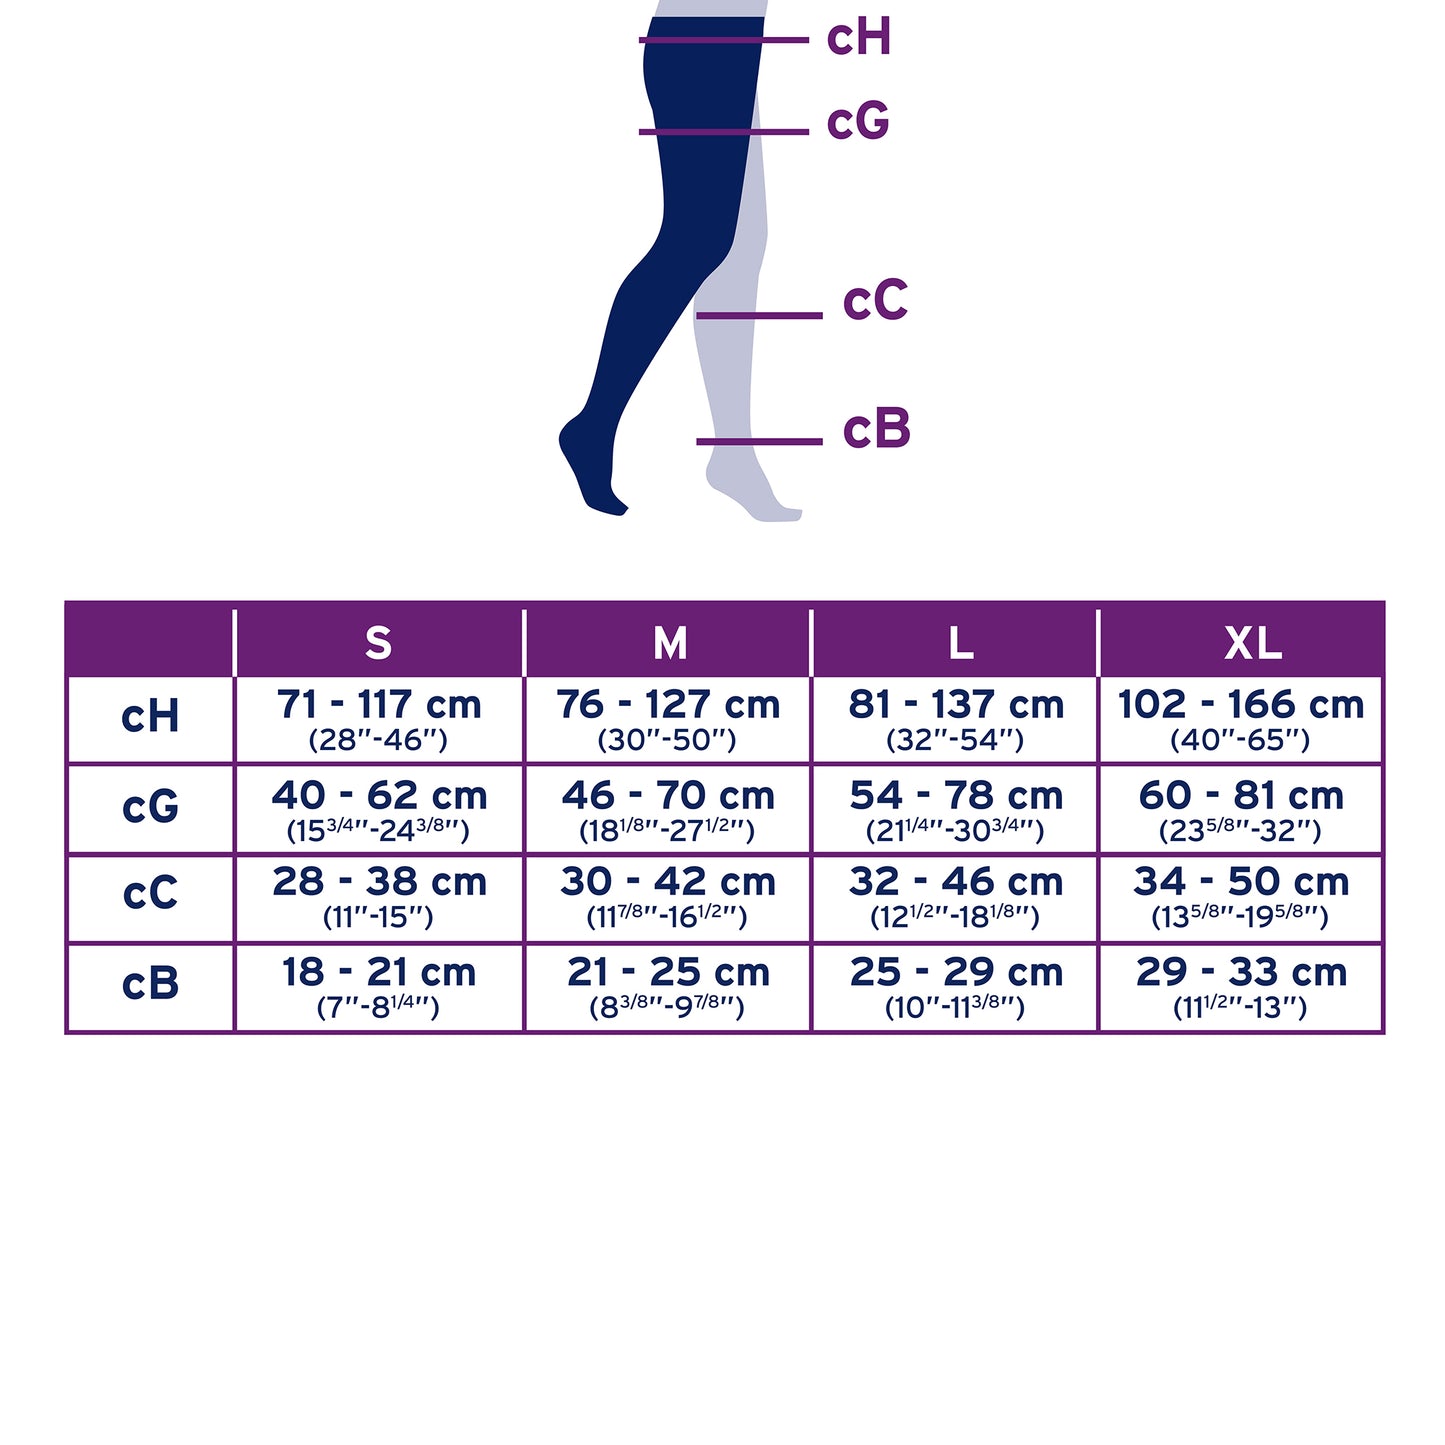 JOBST Relief Compression Stockings 30-40 mmHg Chap Single Leg Open Toe